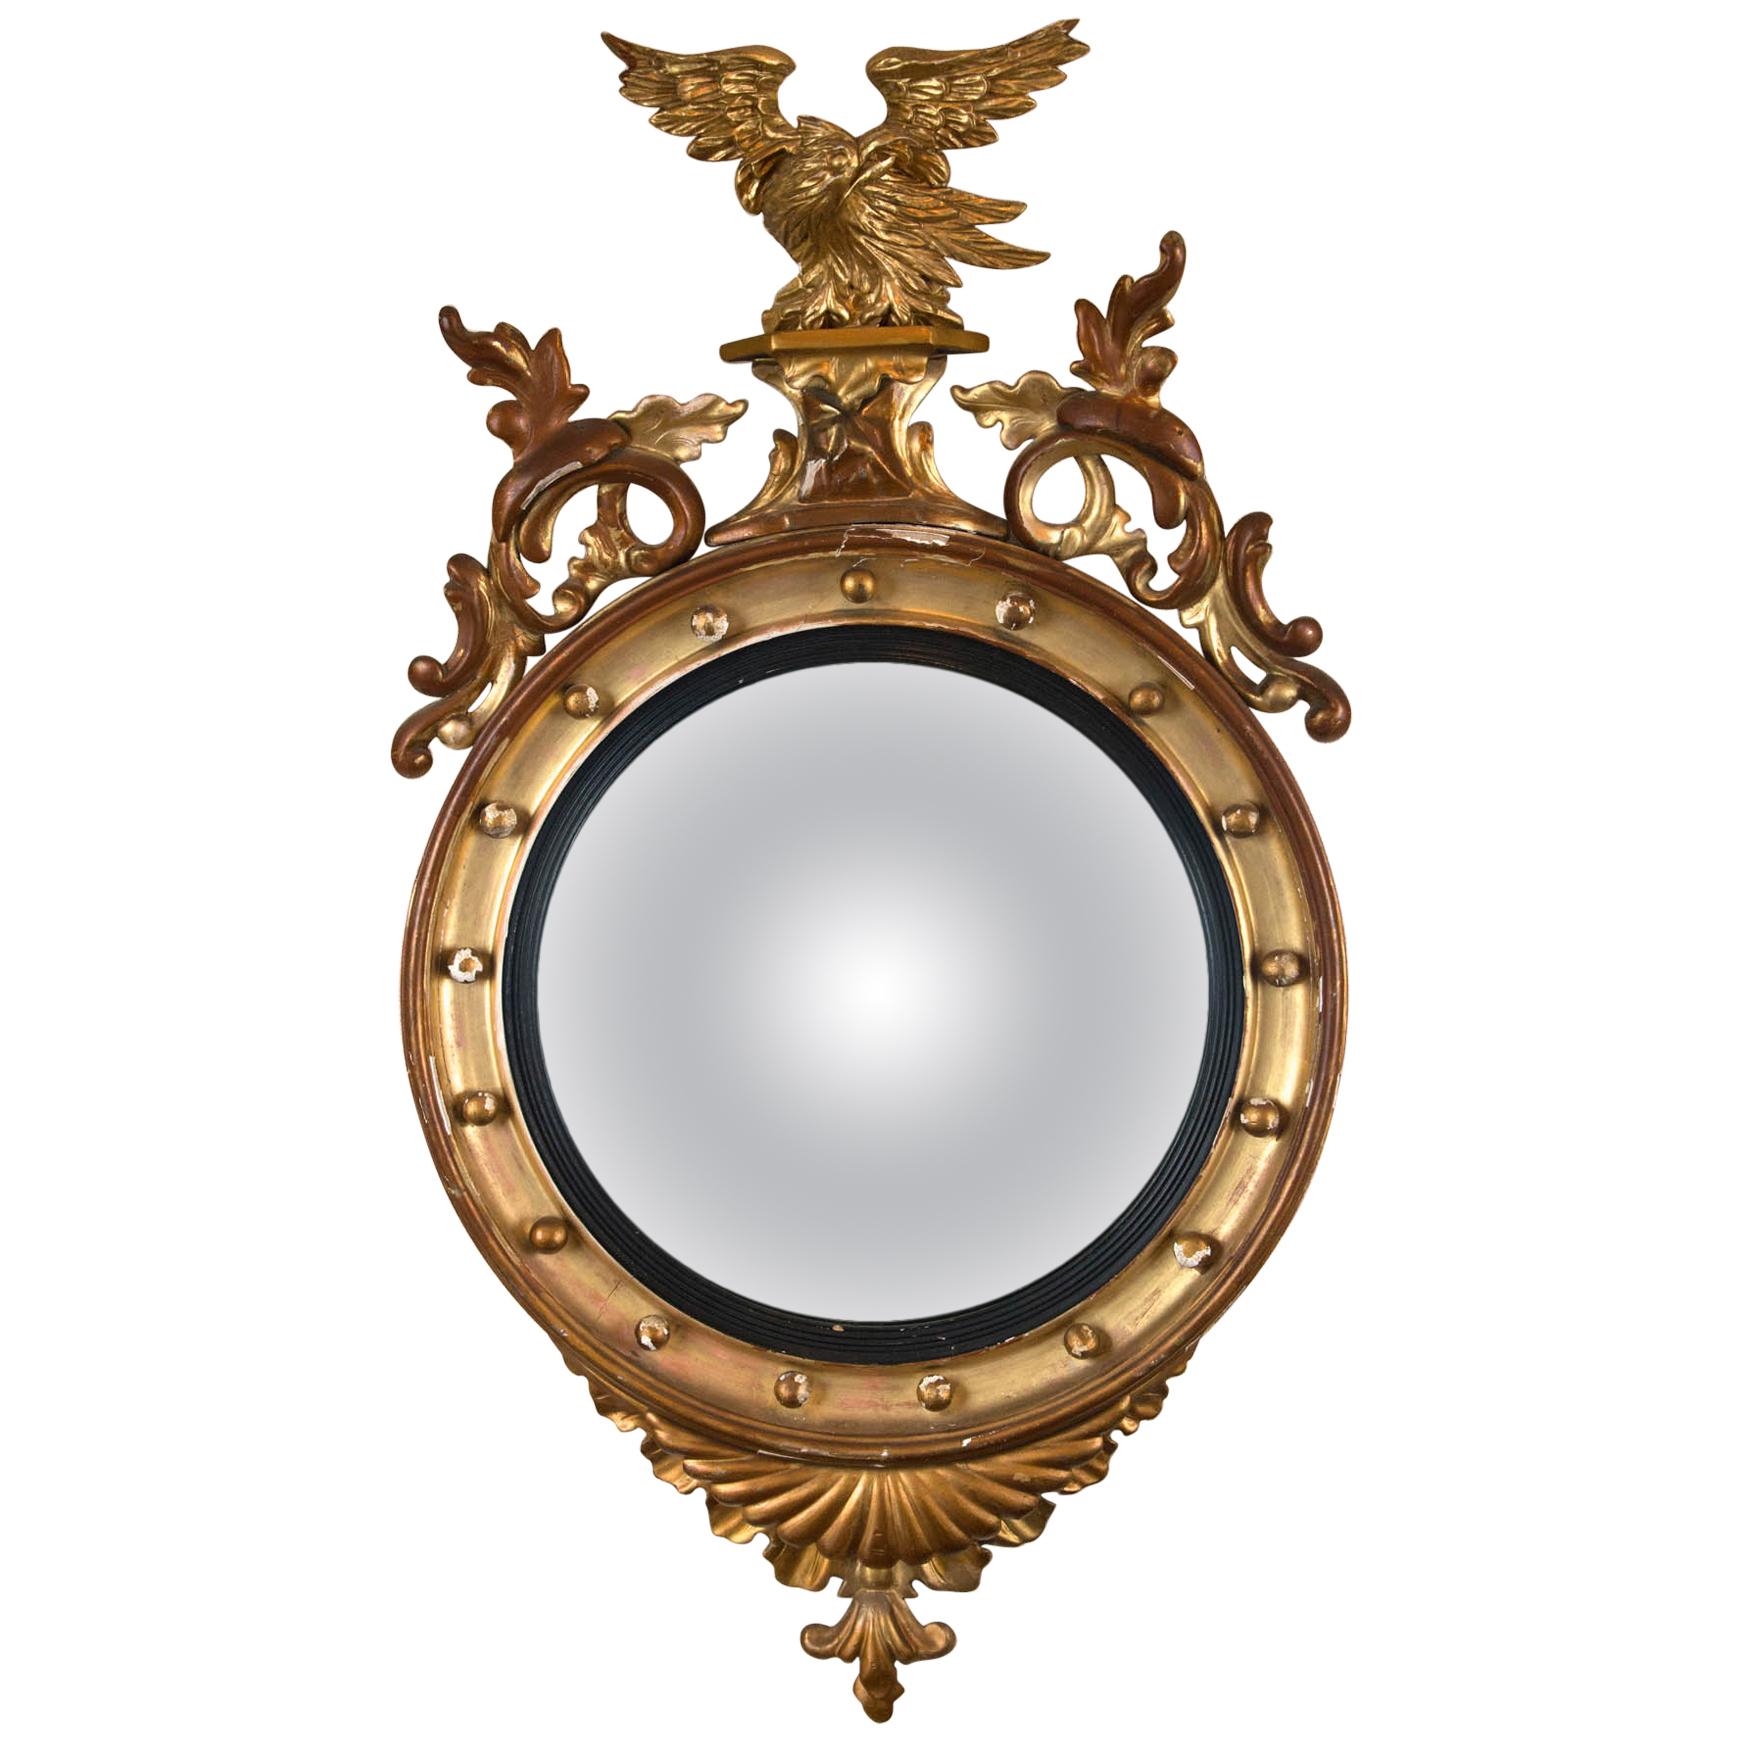 Regency Convex Giltwood Mirror